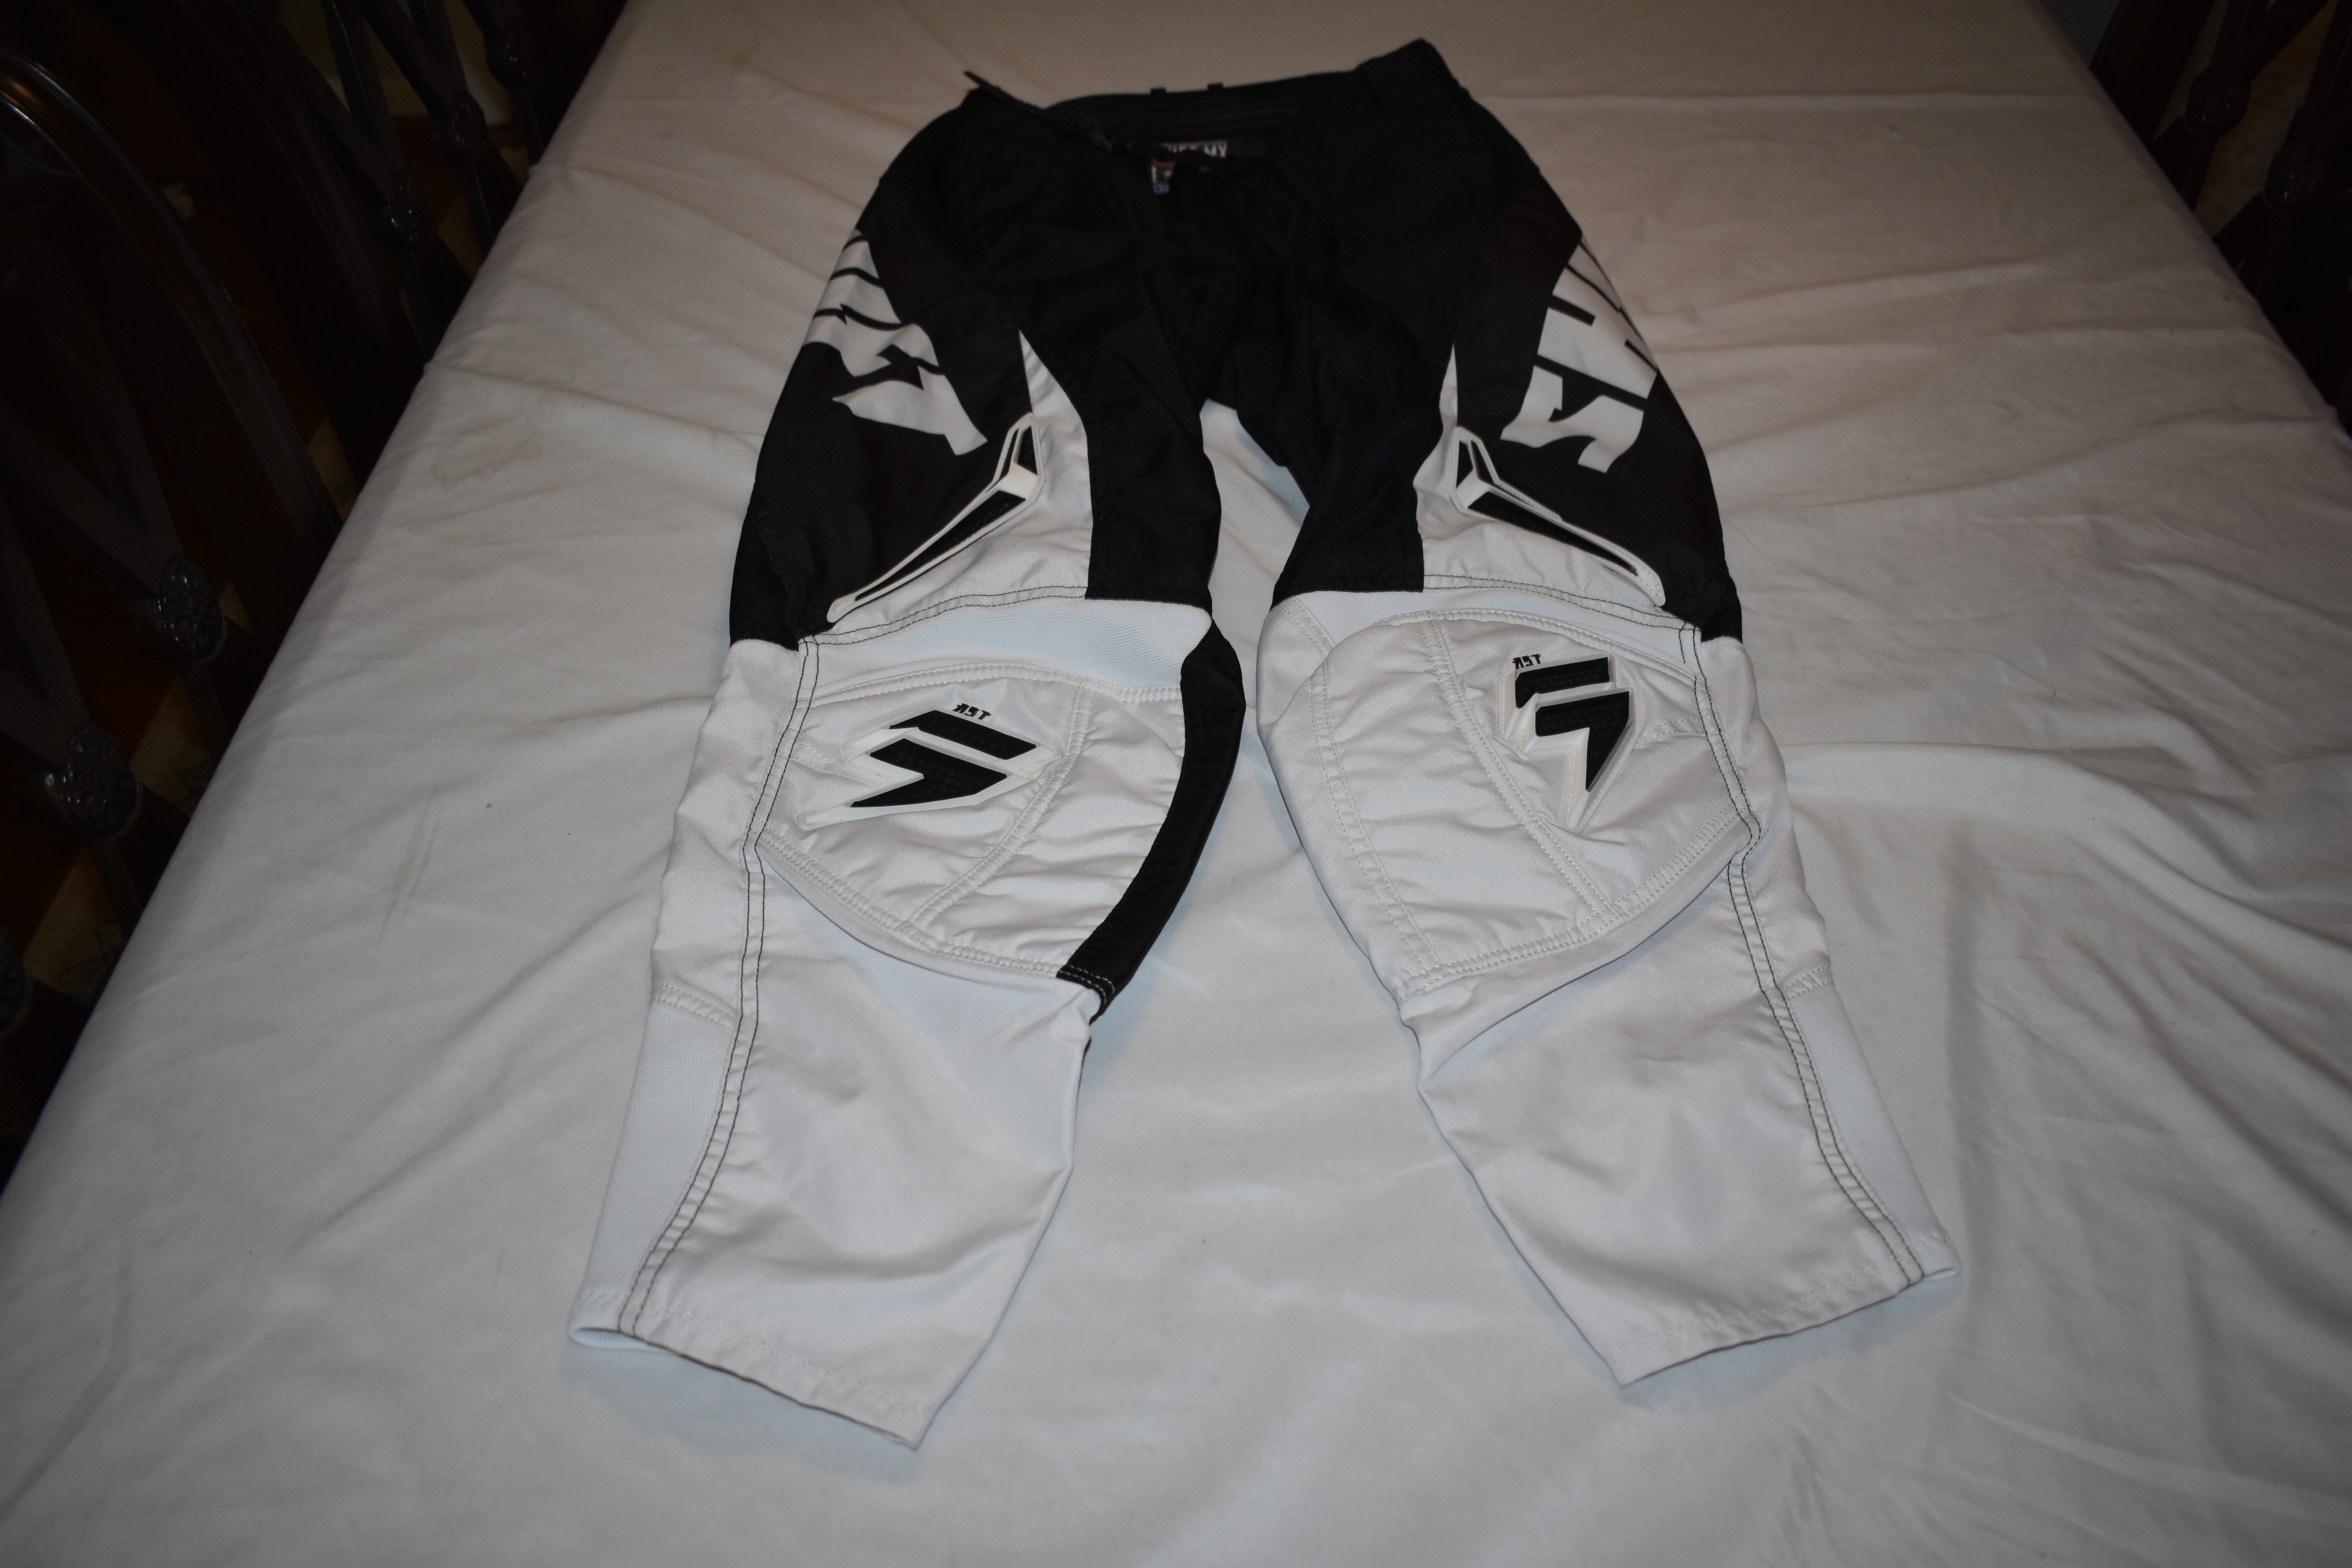 Shift MX Assault Ride Club Motocross Race Pants, Black/White, Size 30 - Great Condition!